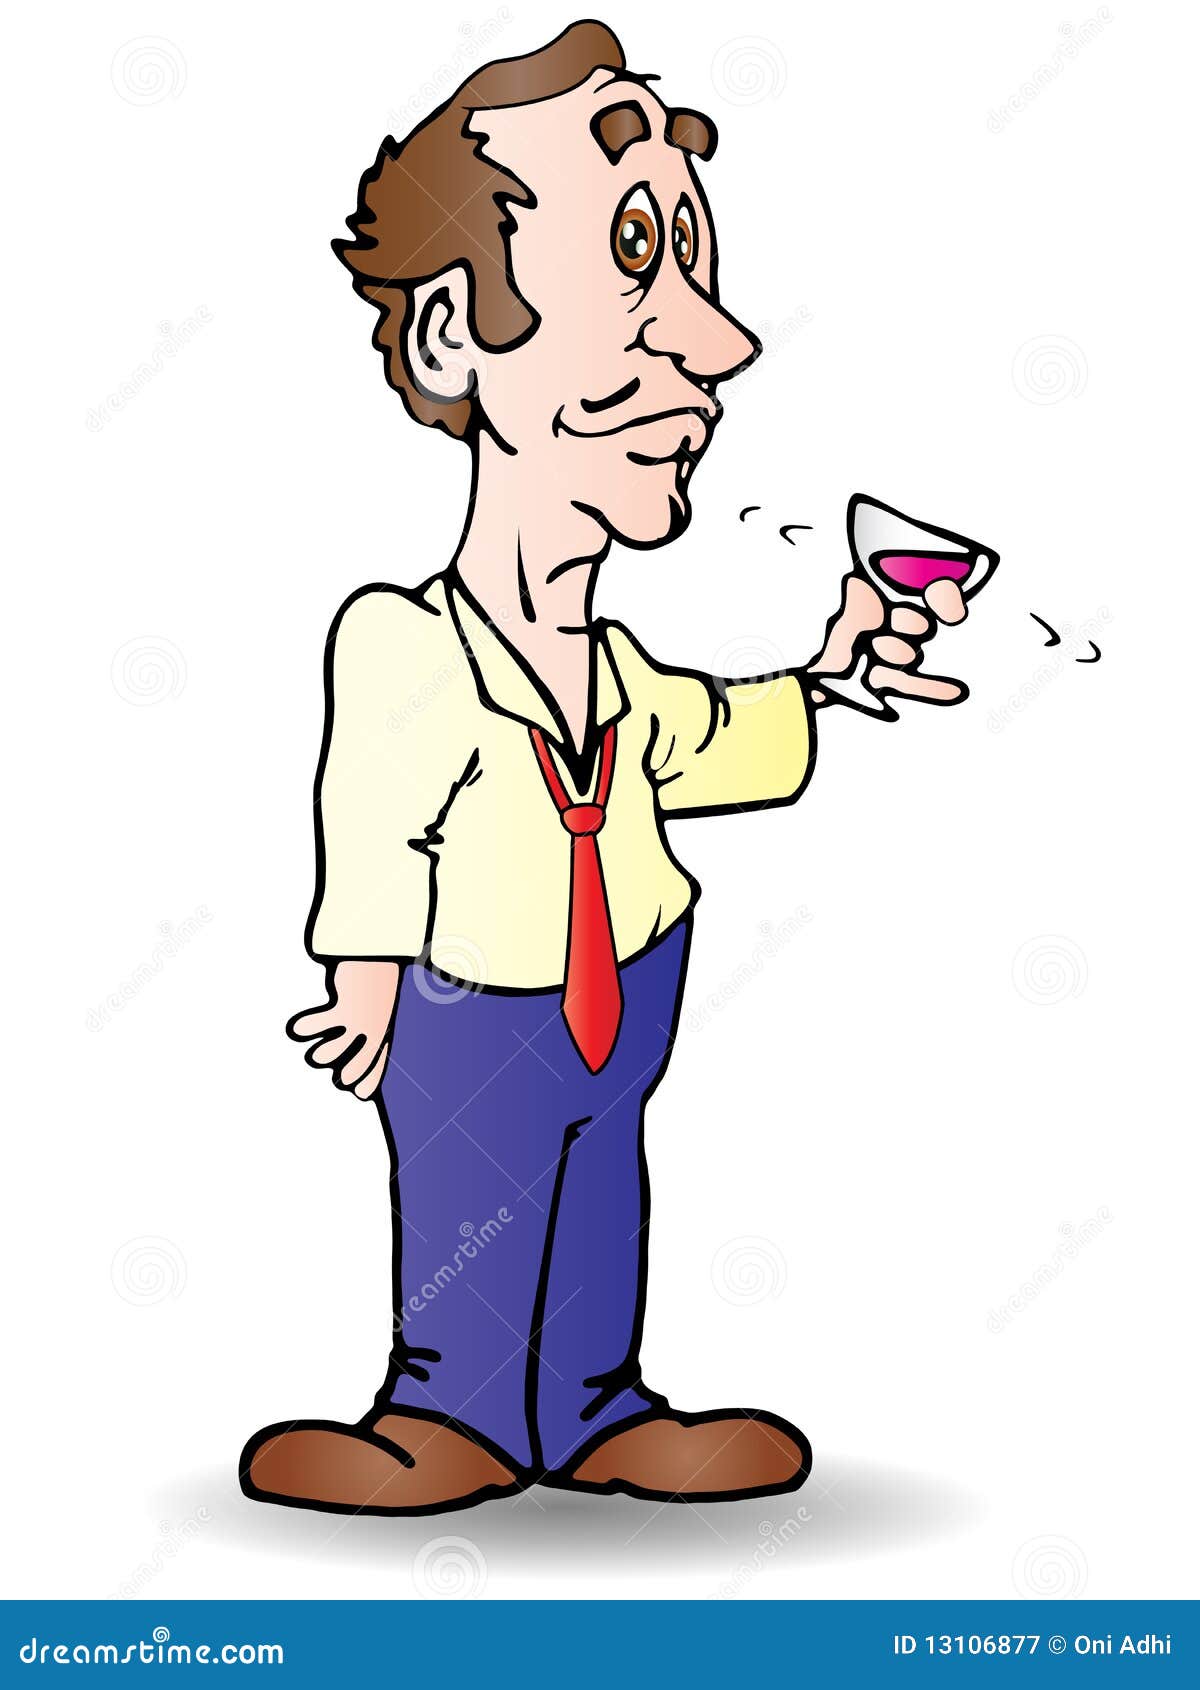 Businessman drink wine stock illustration. Illustration of juice - 13106877